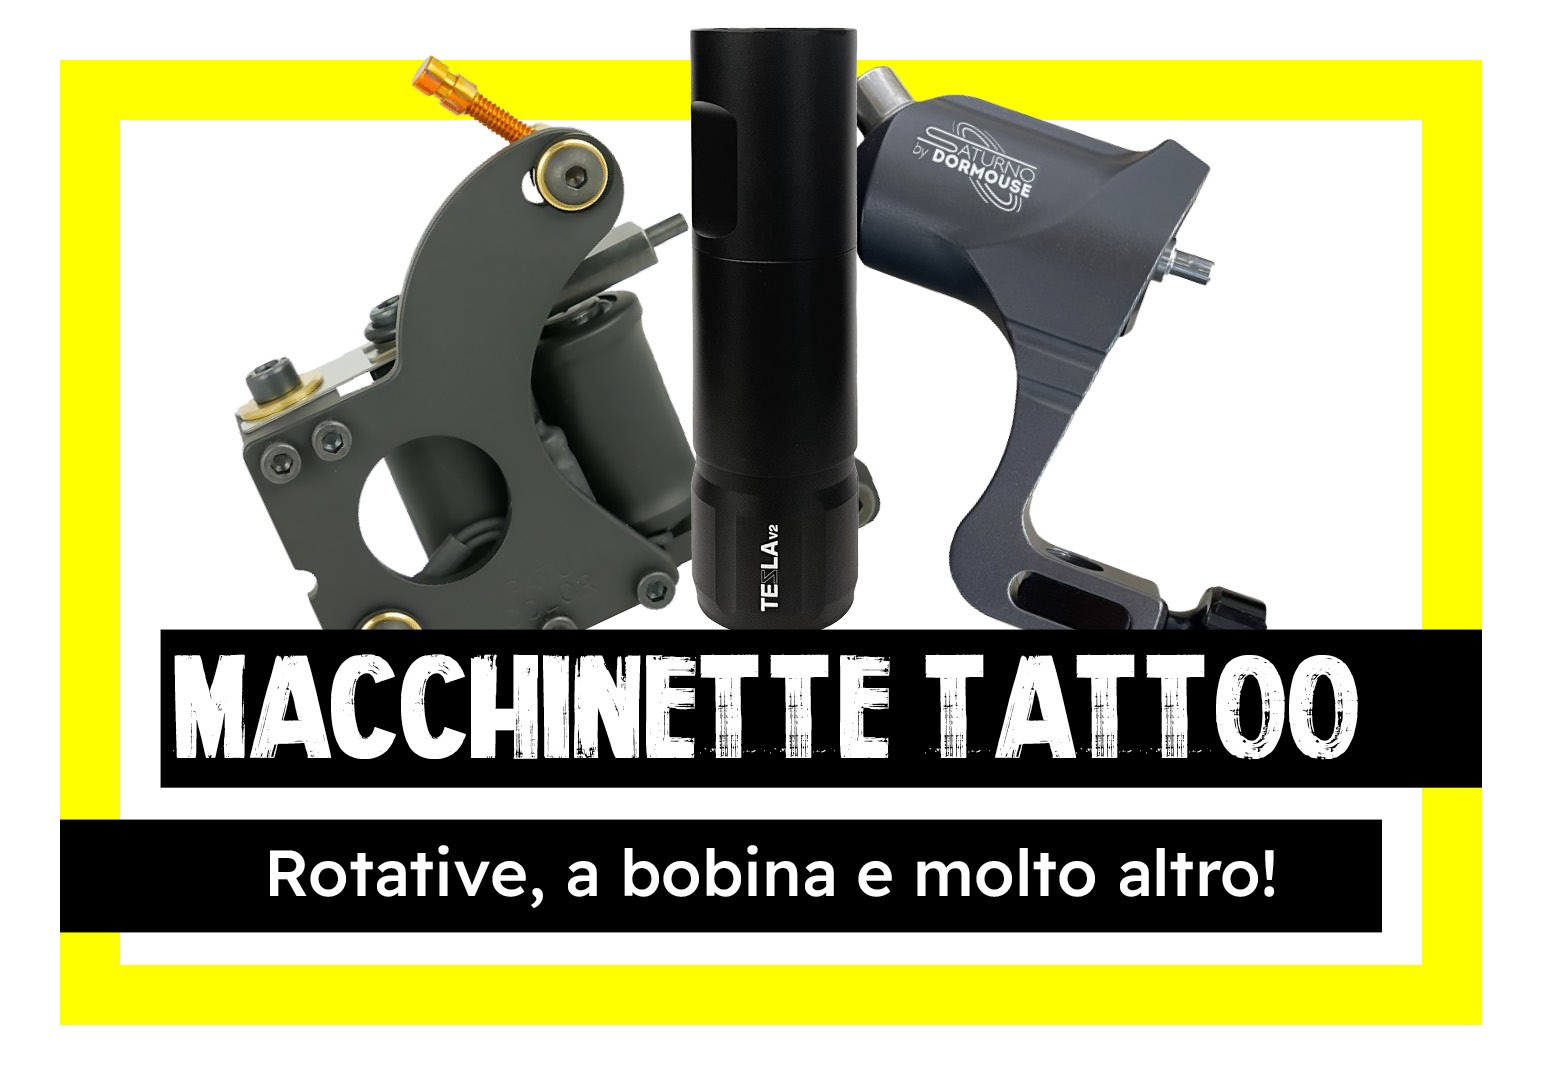 Macchinette Tattoo